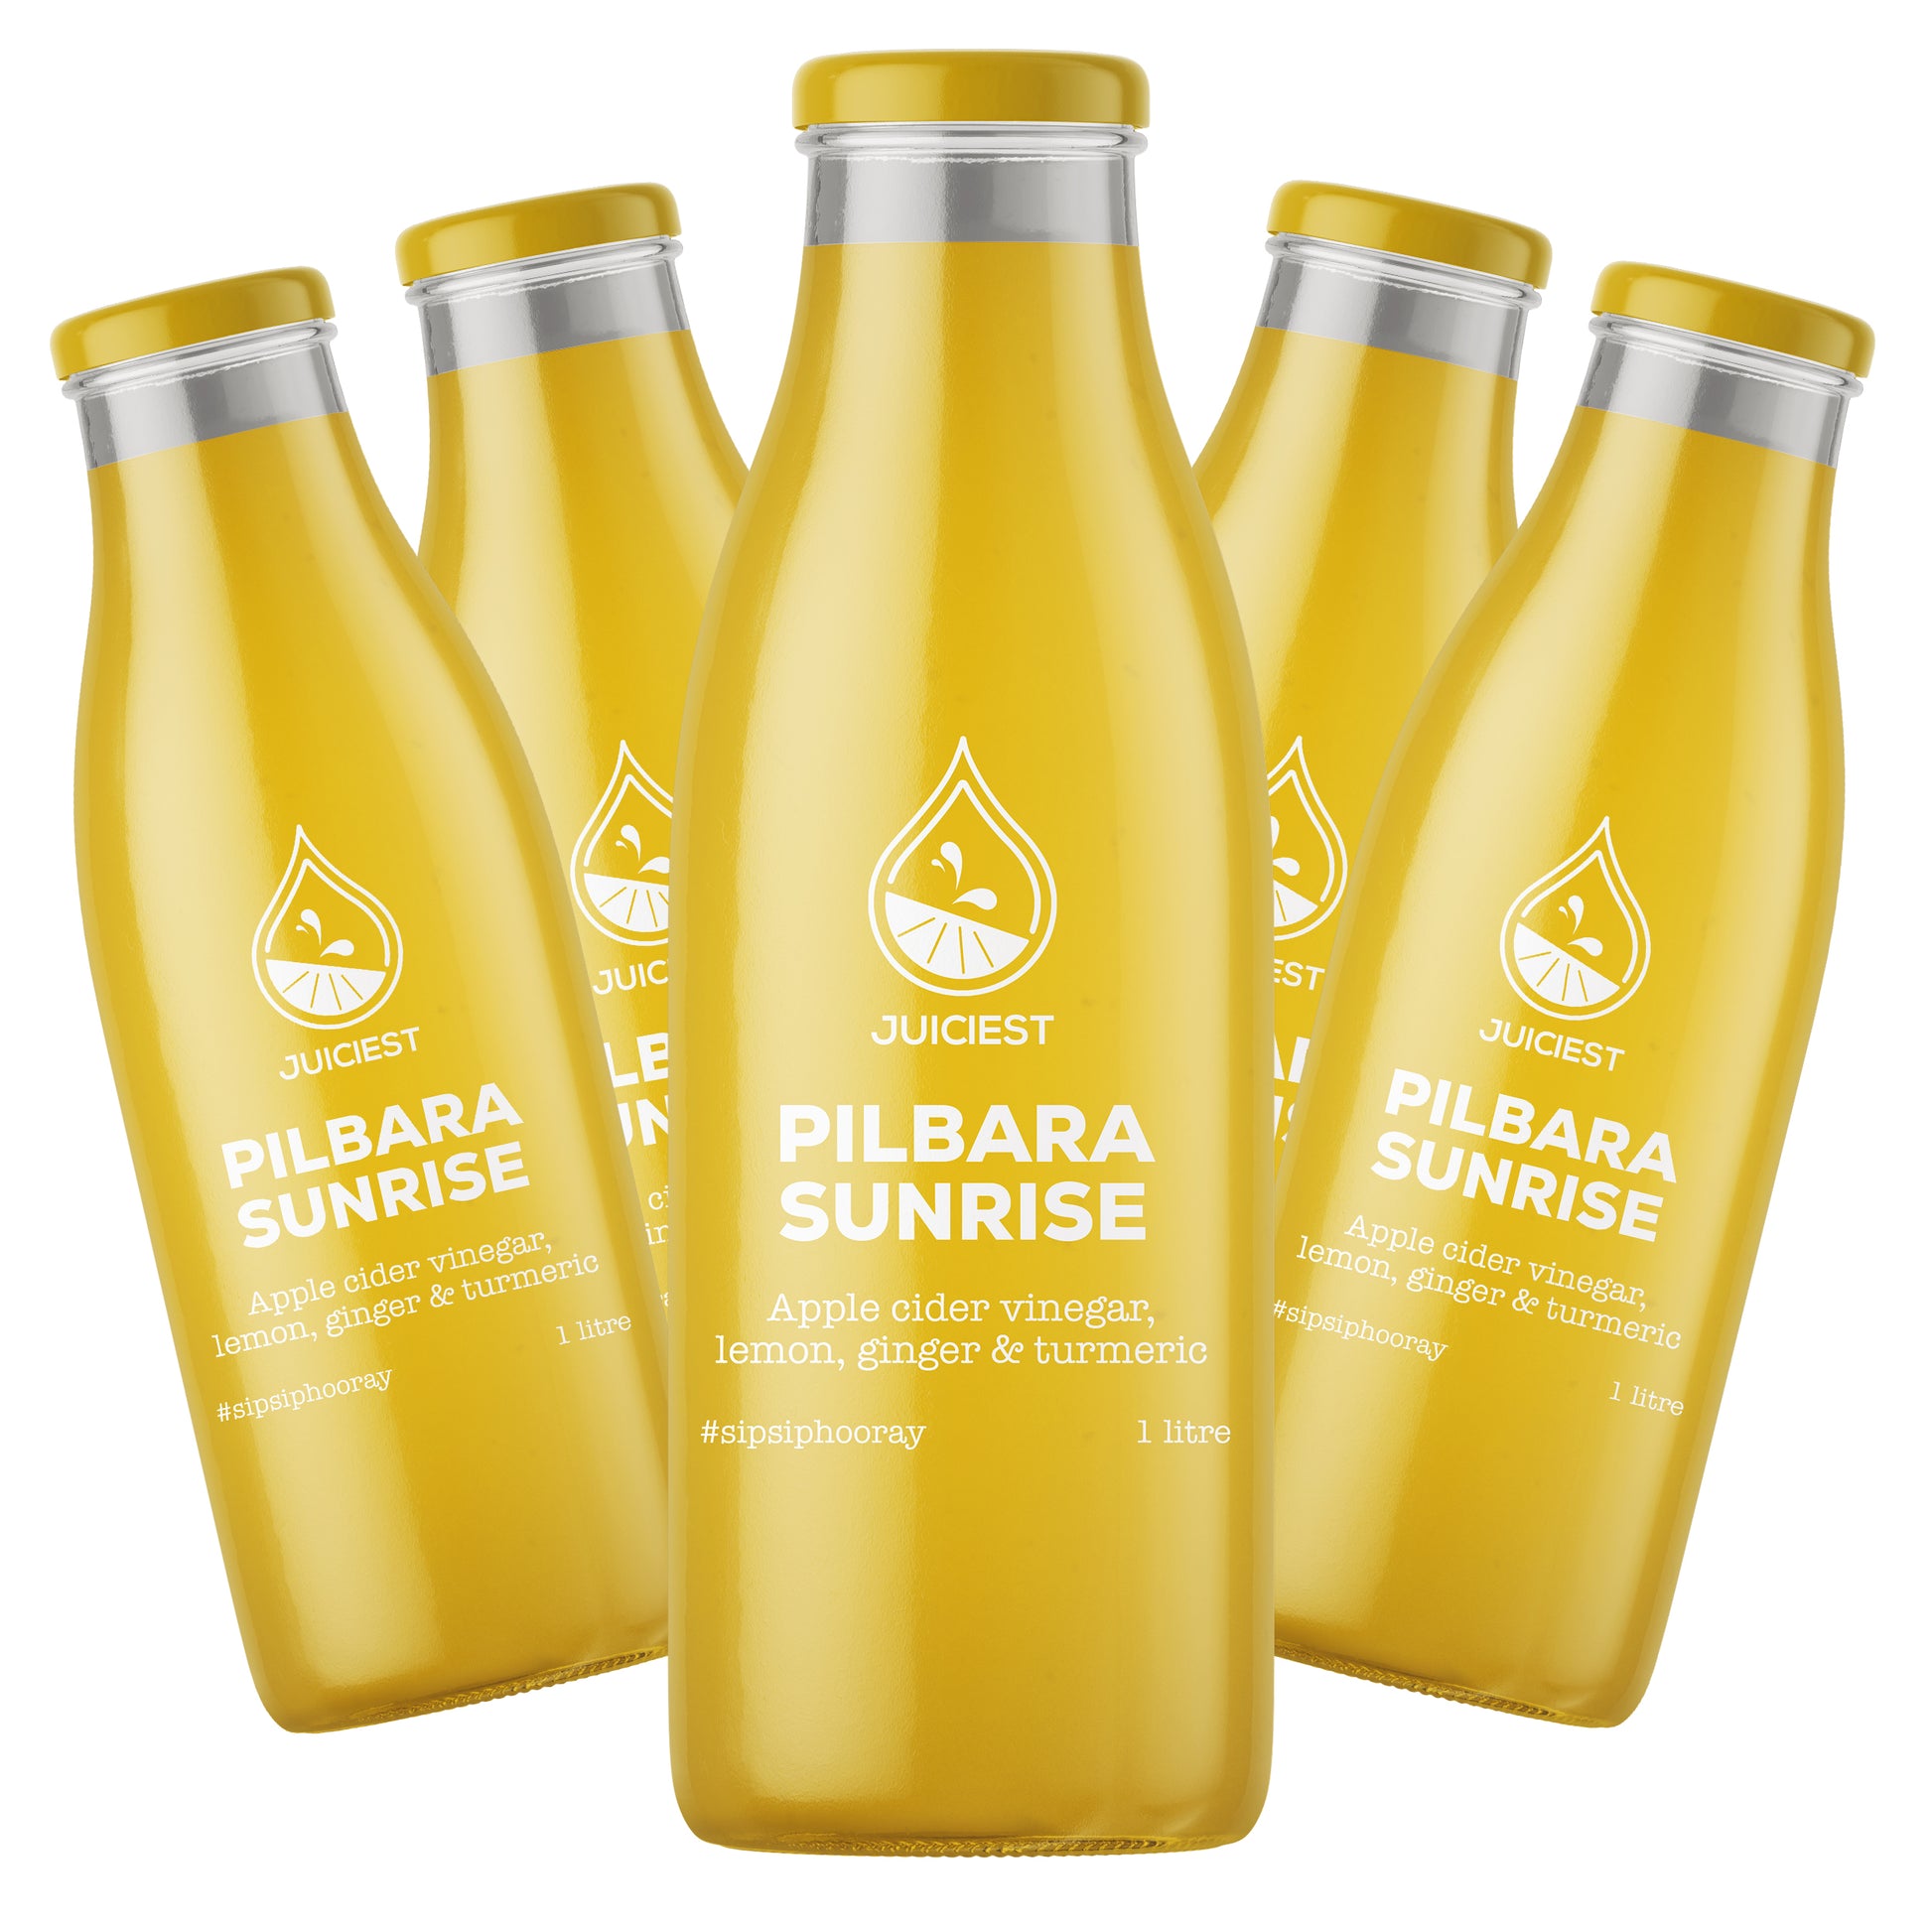 Juiciest Pilbara Sunrise 5x 1L bottles